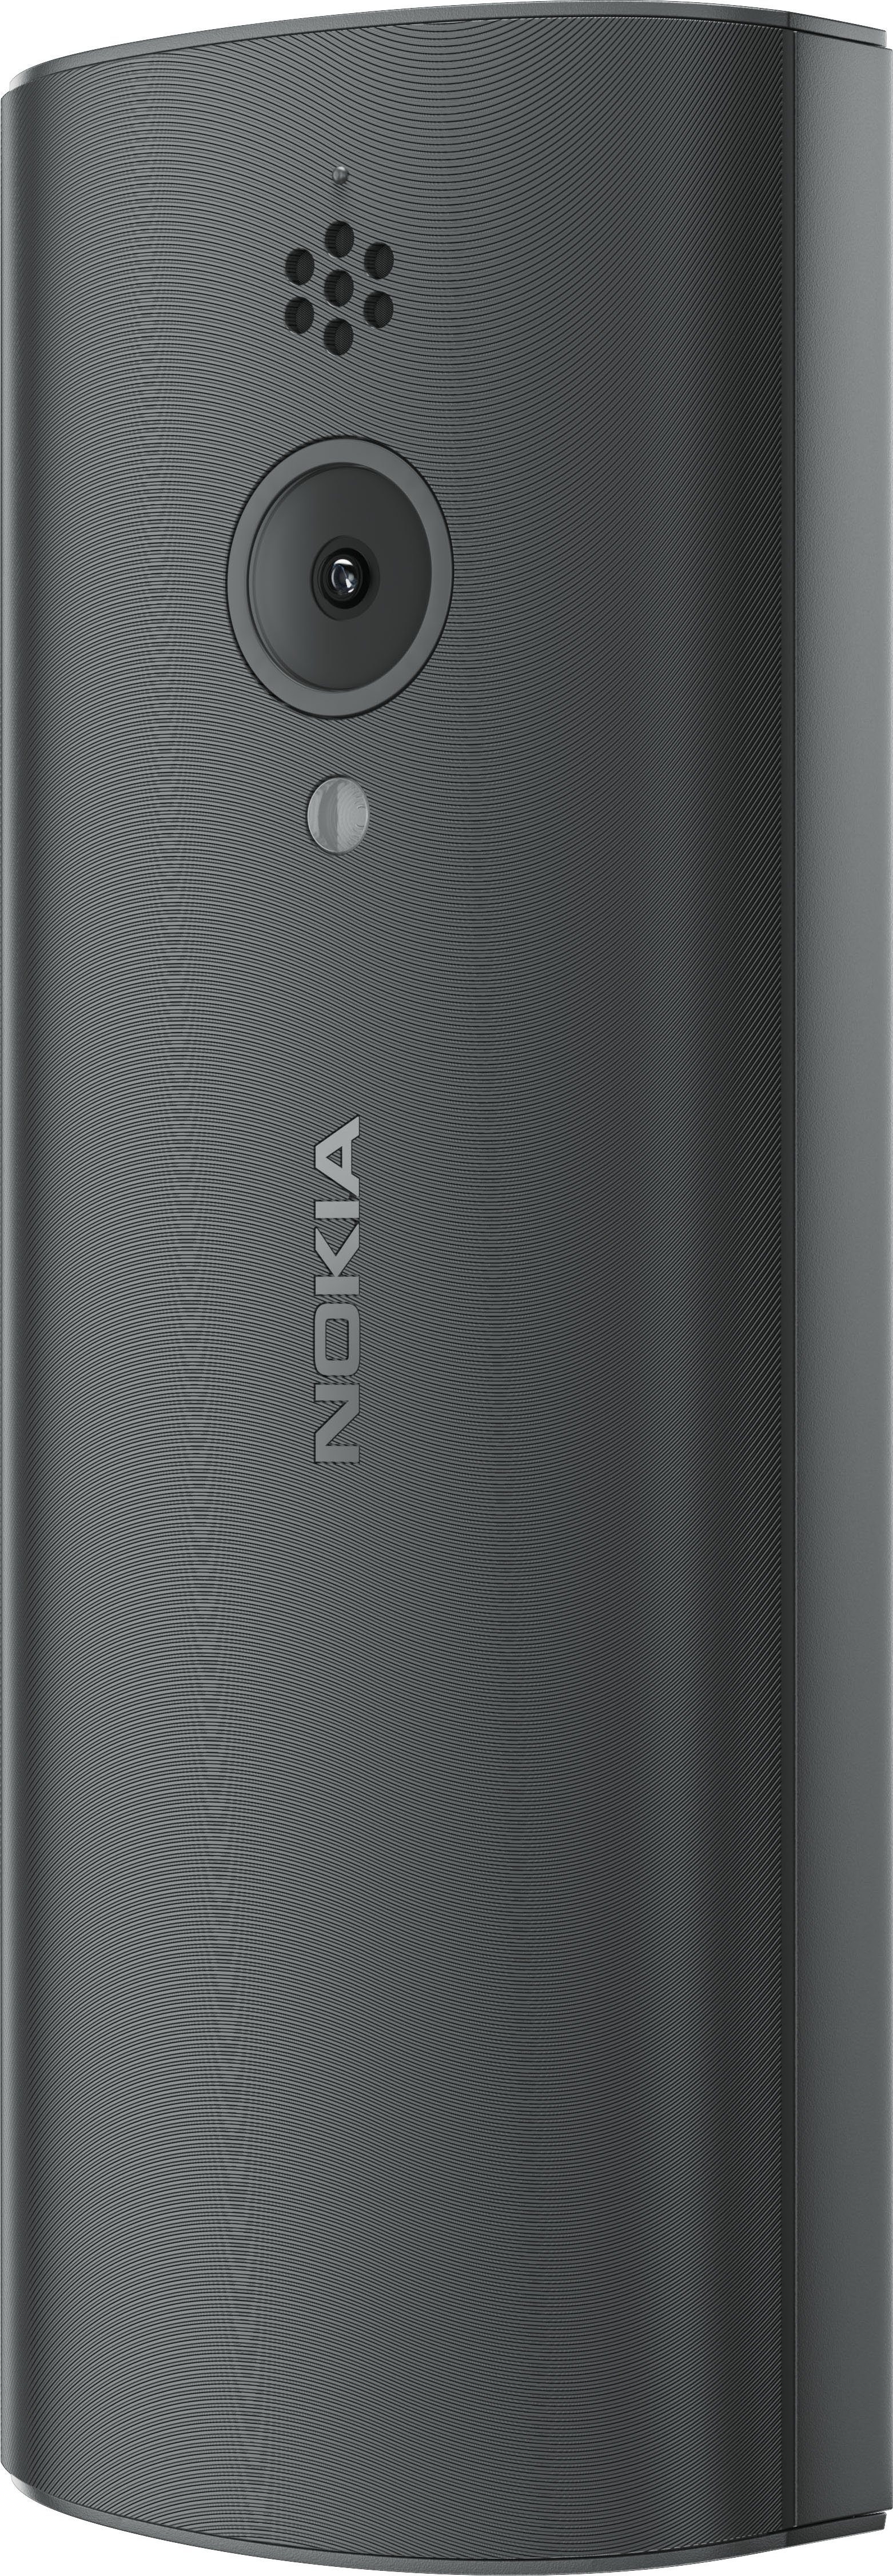 2G Nokia Zoll) cm/2,4 (6,09 Handy 2023 150 Edition